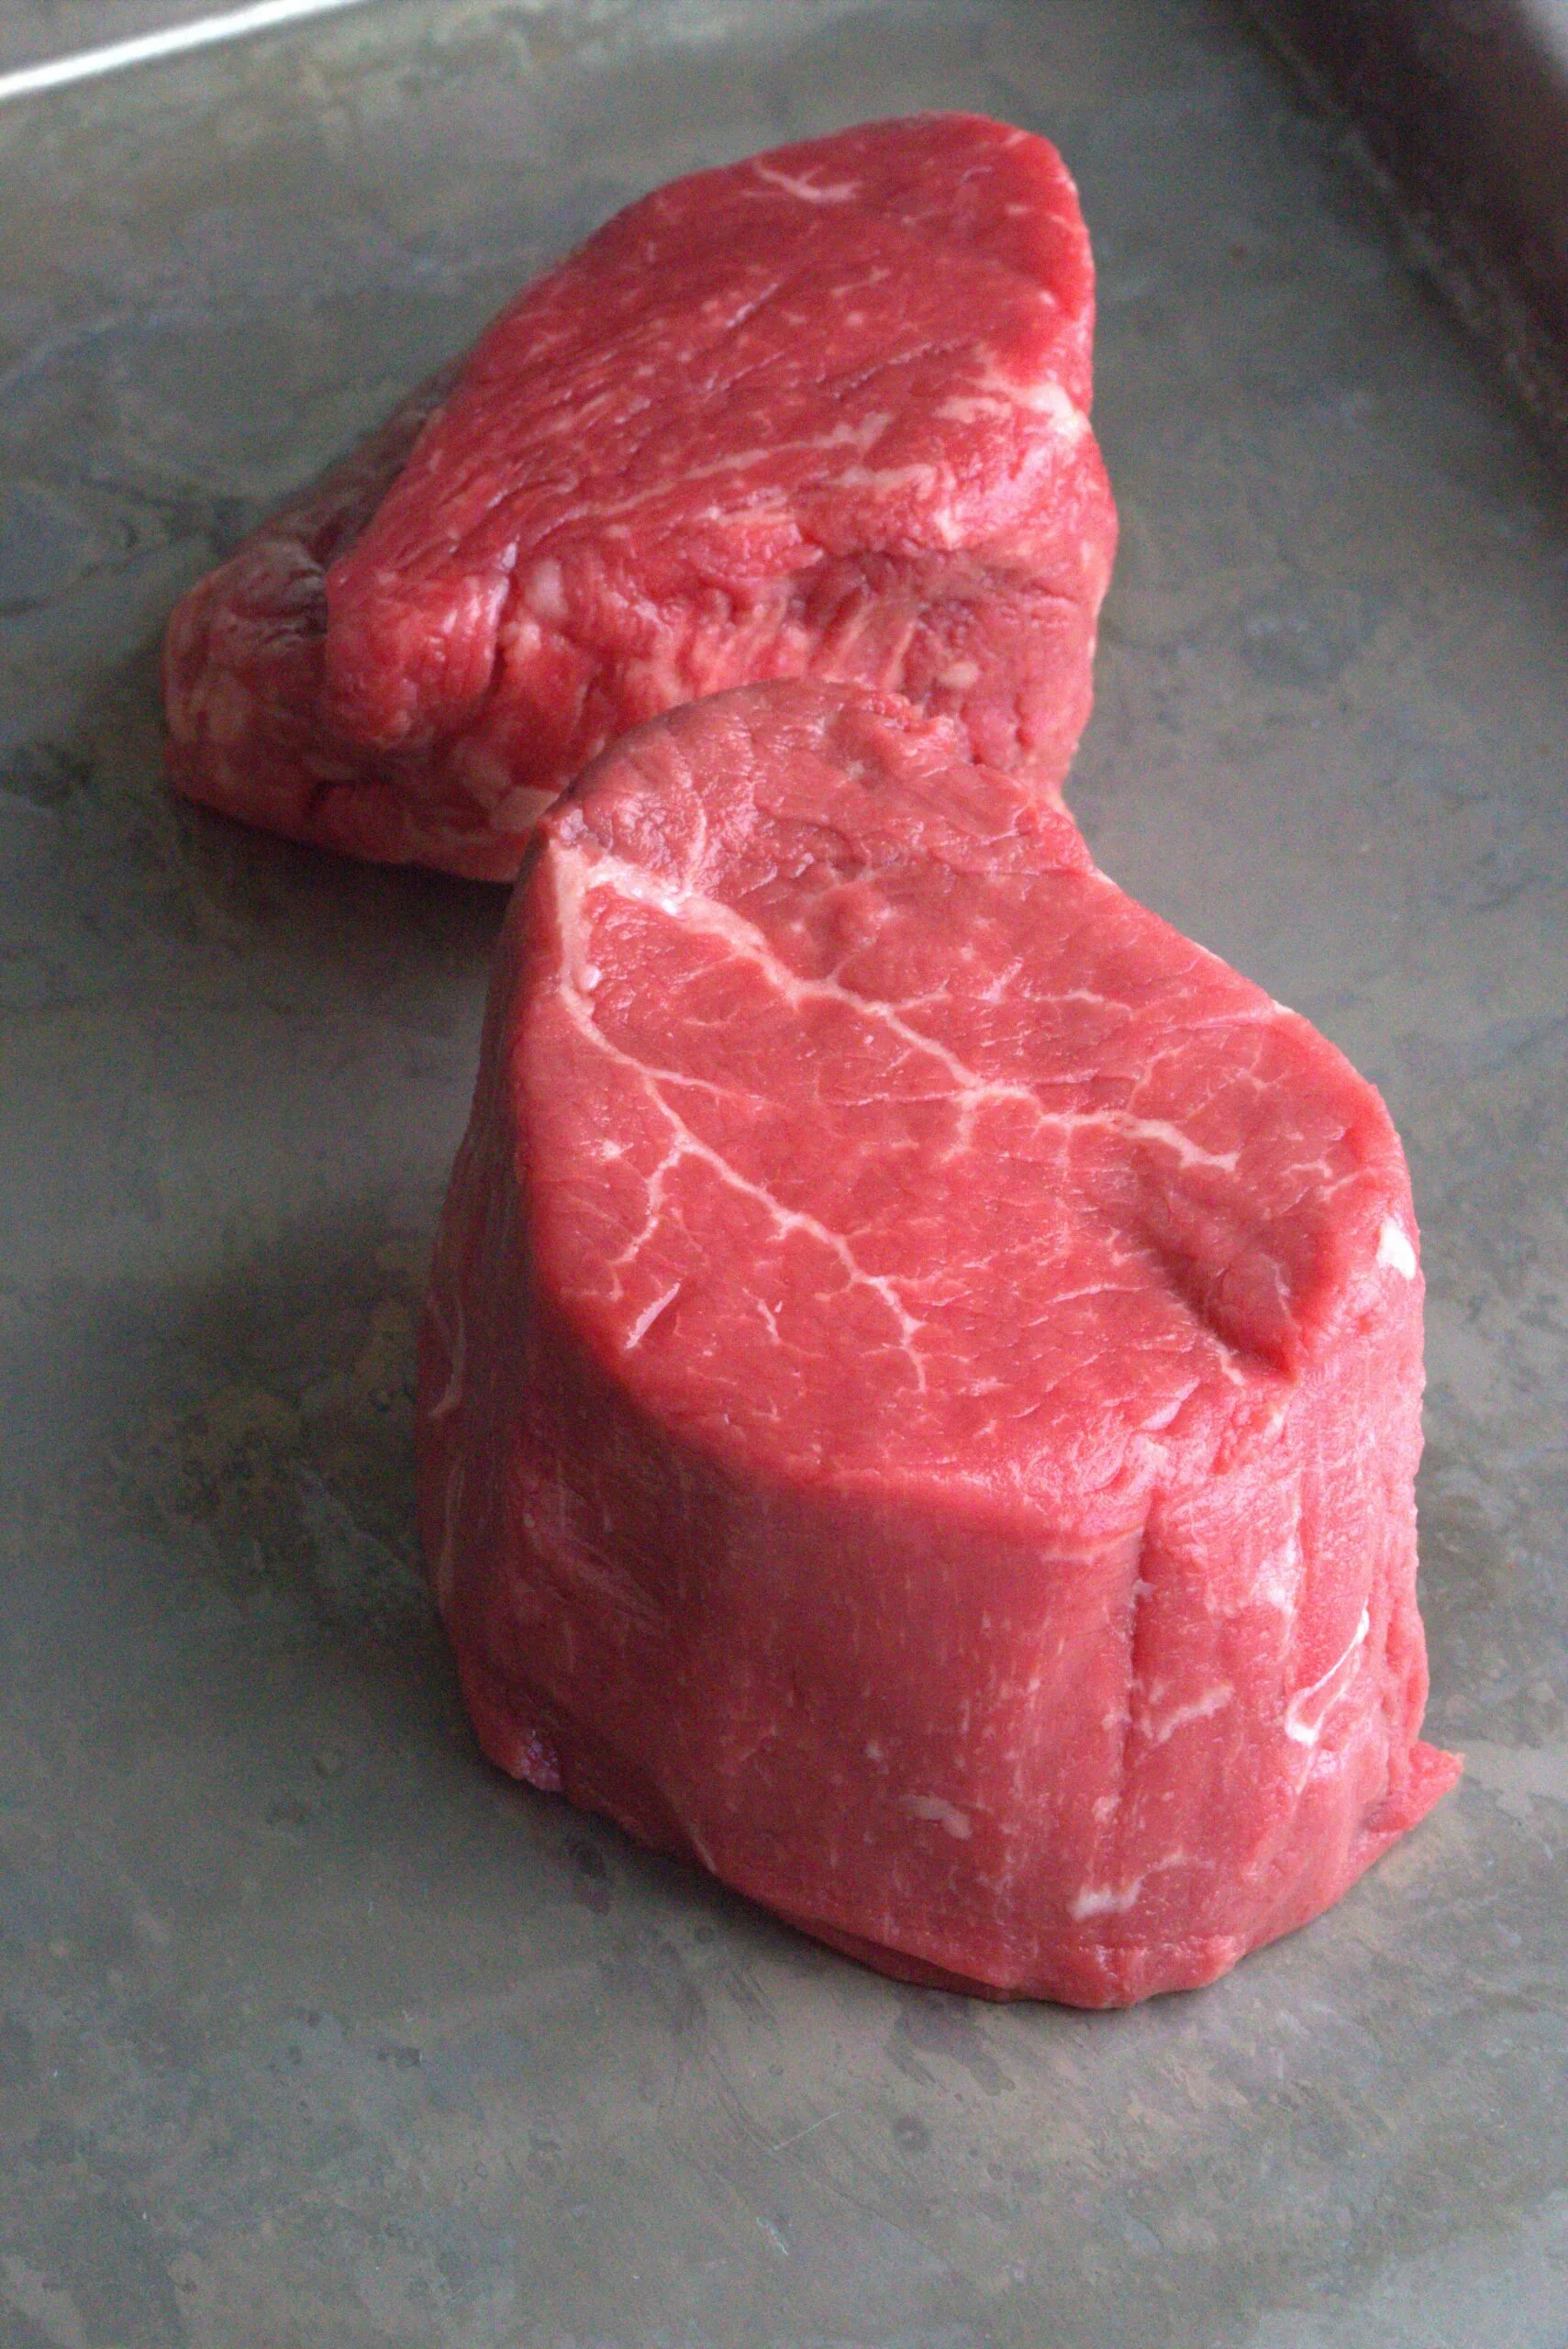 filet mignon steaks on a baking sheet (raw)